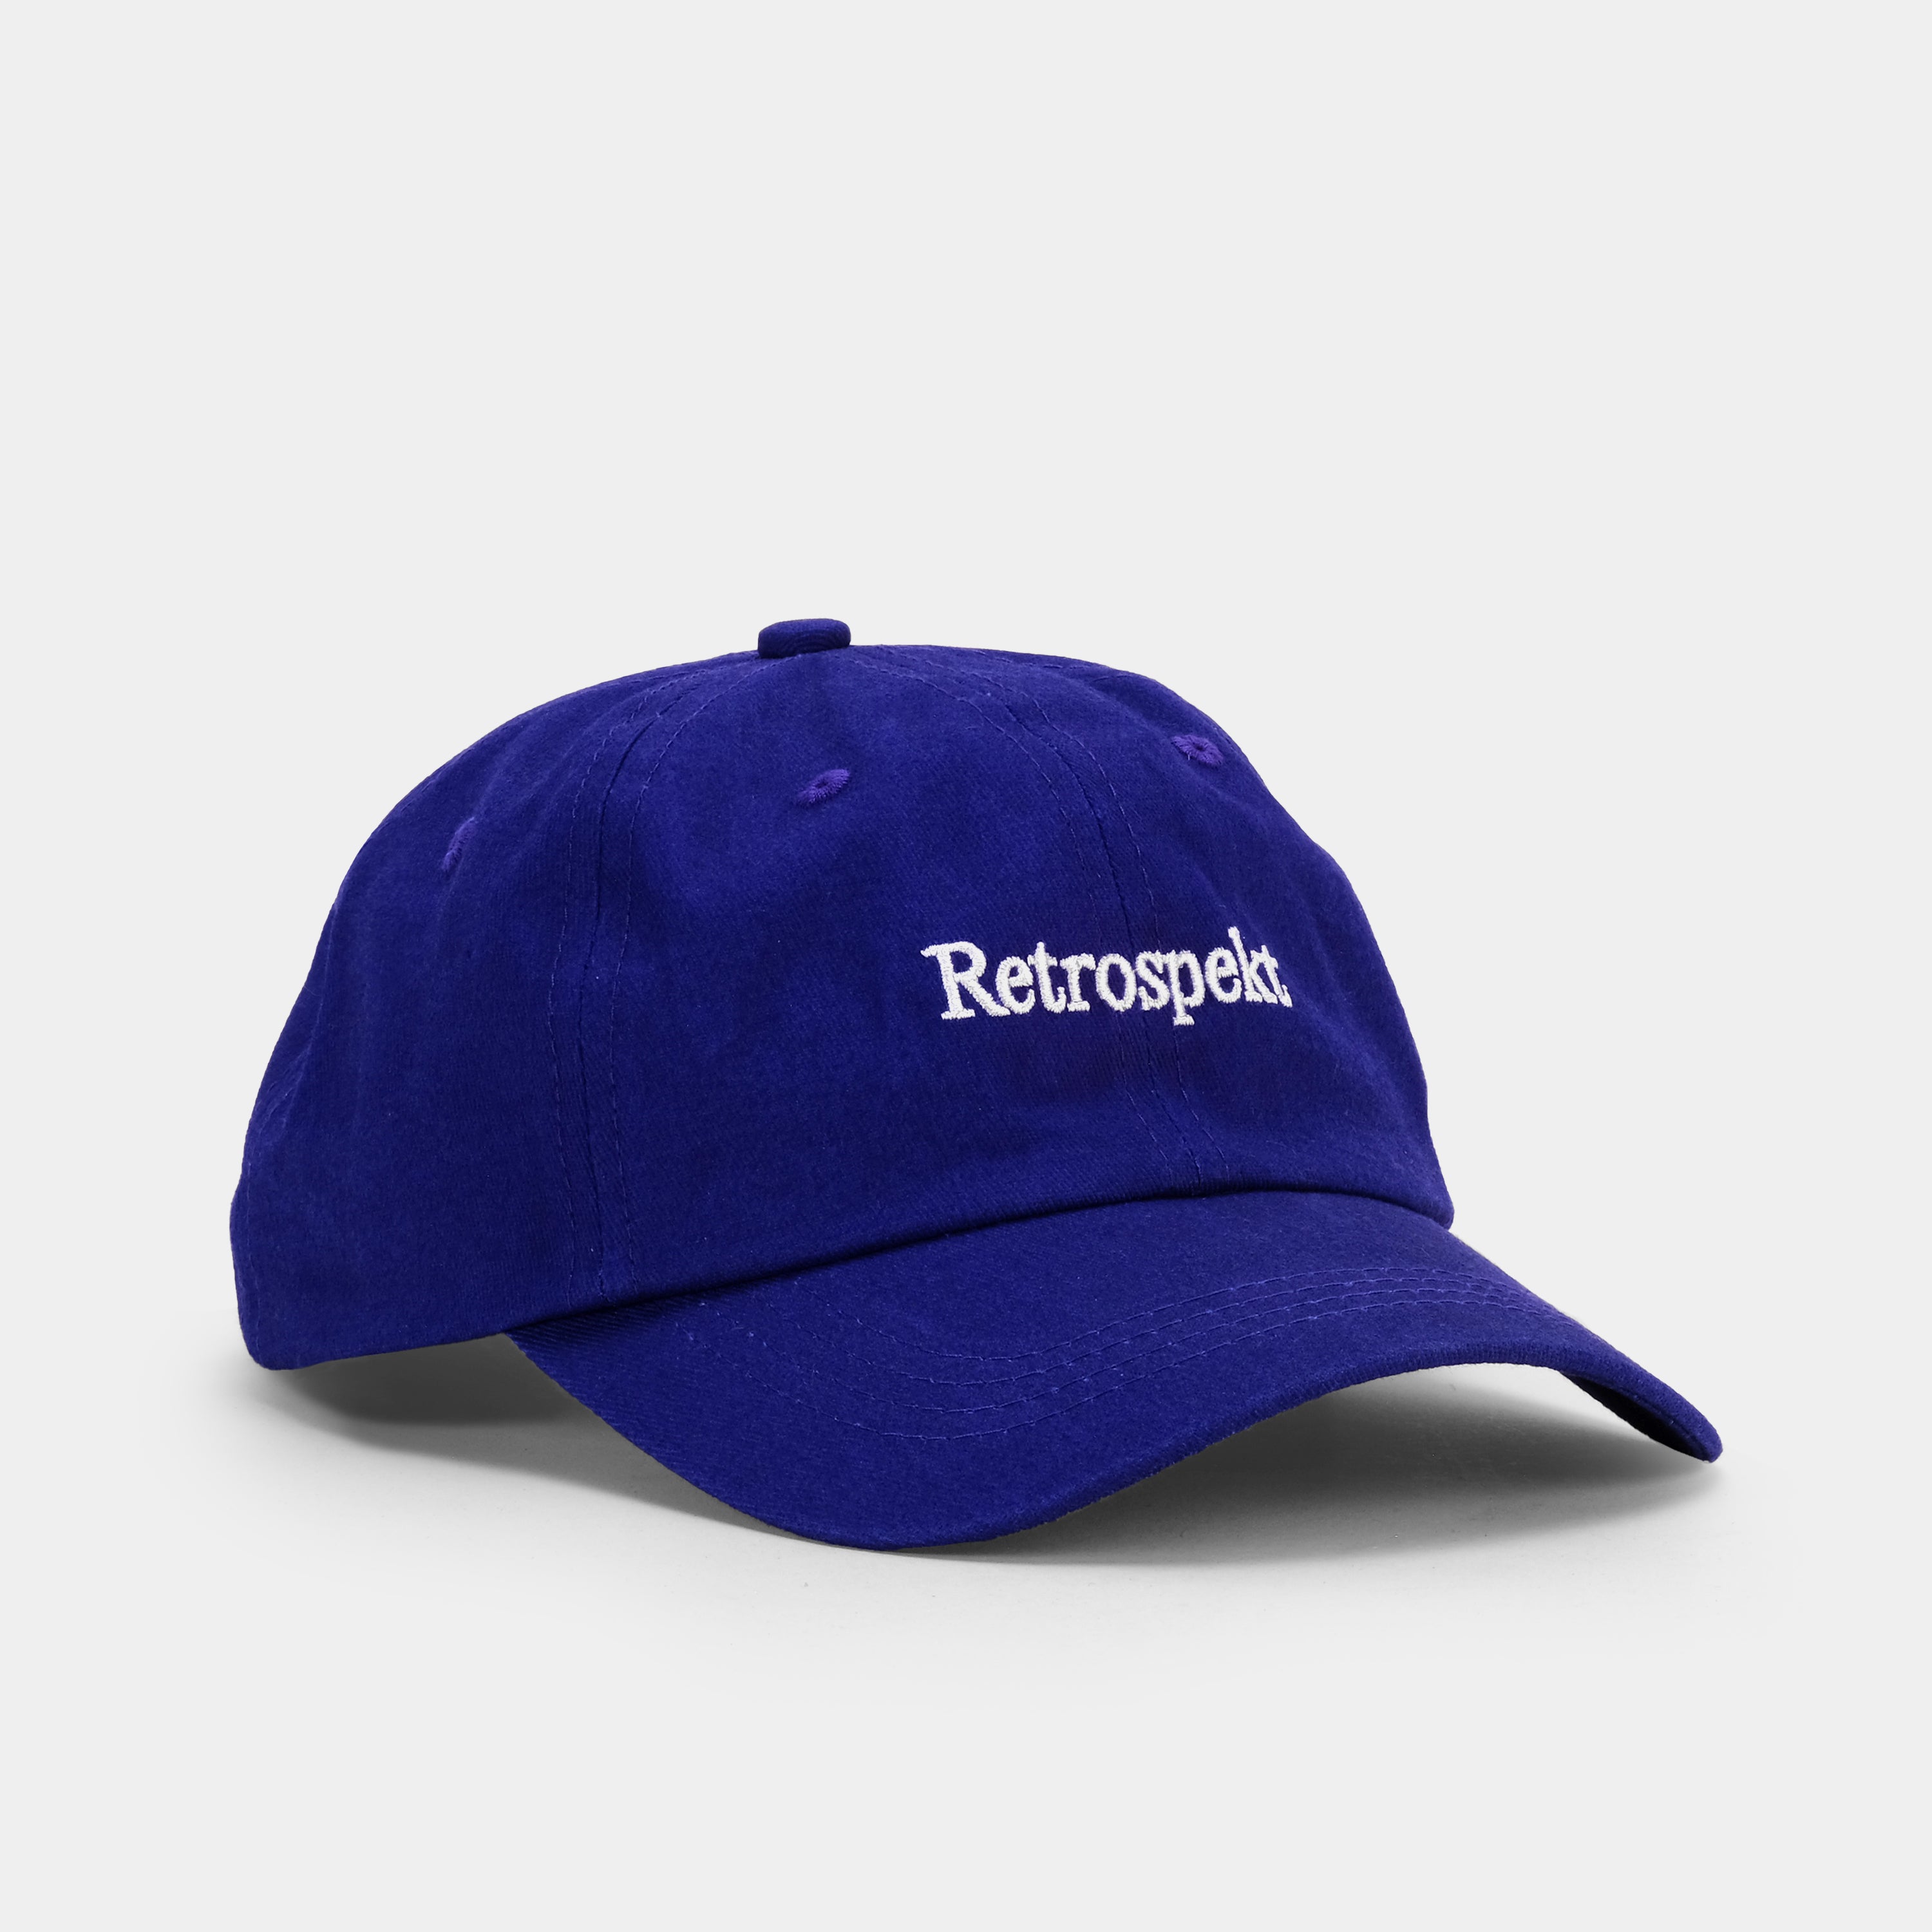 Blue "Retrospekt" Hat